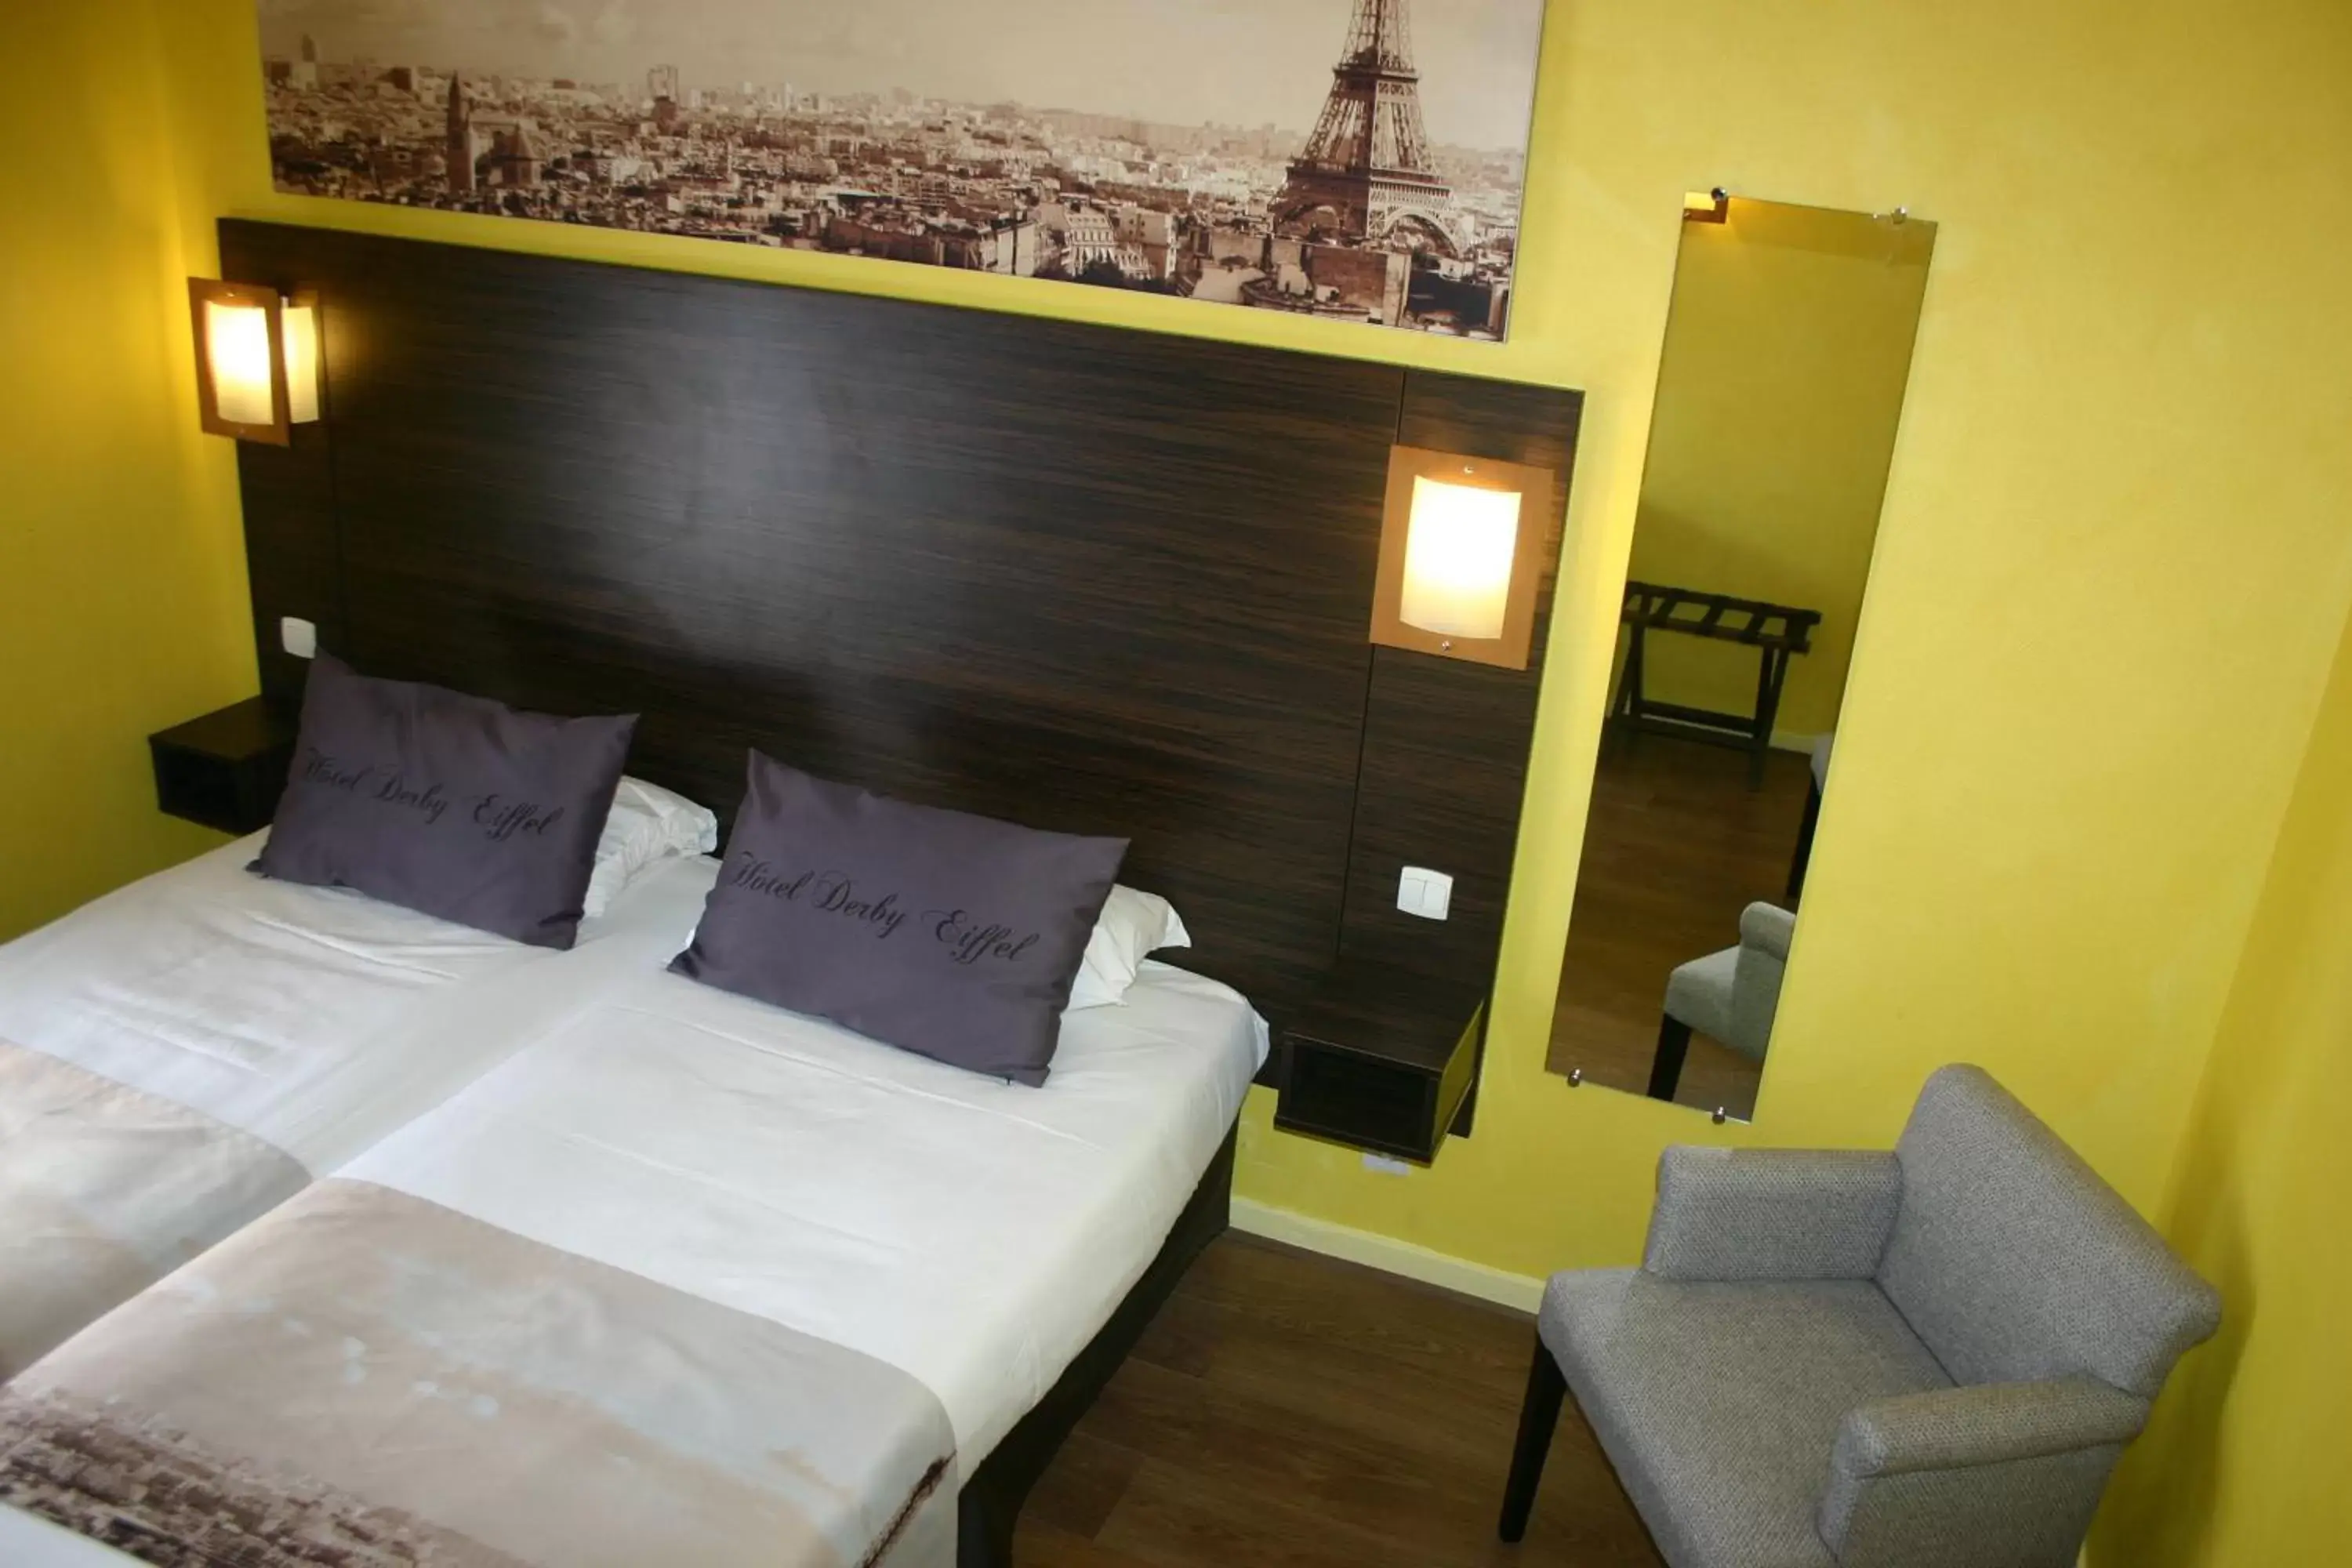 Bed in Hôtel Derby Eiffel